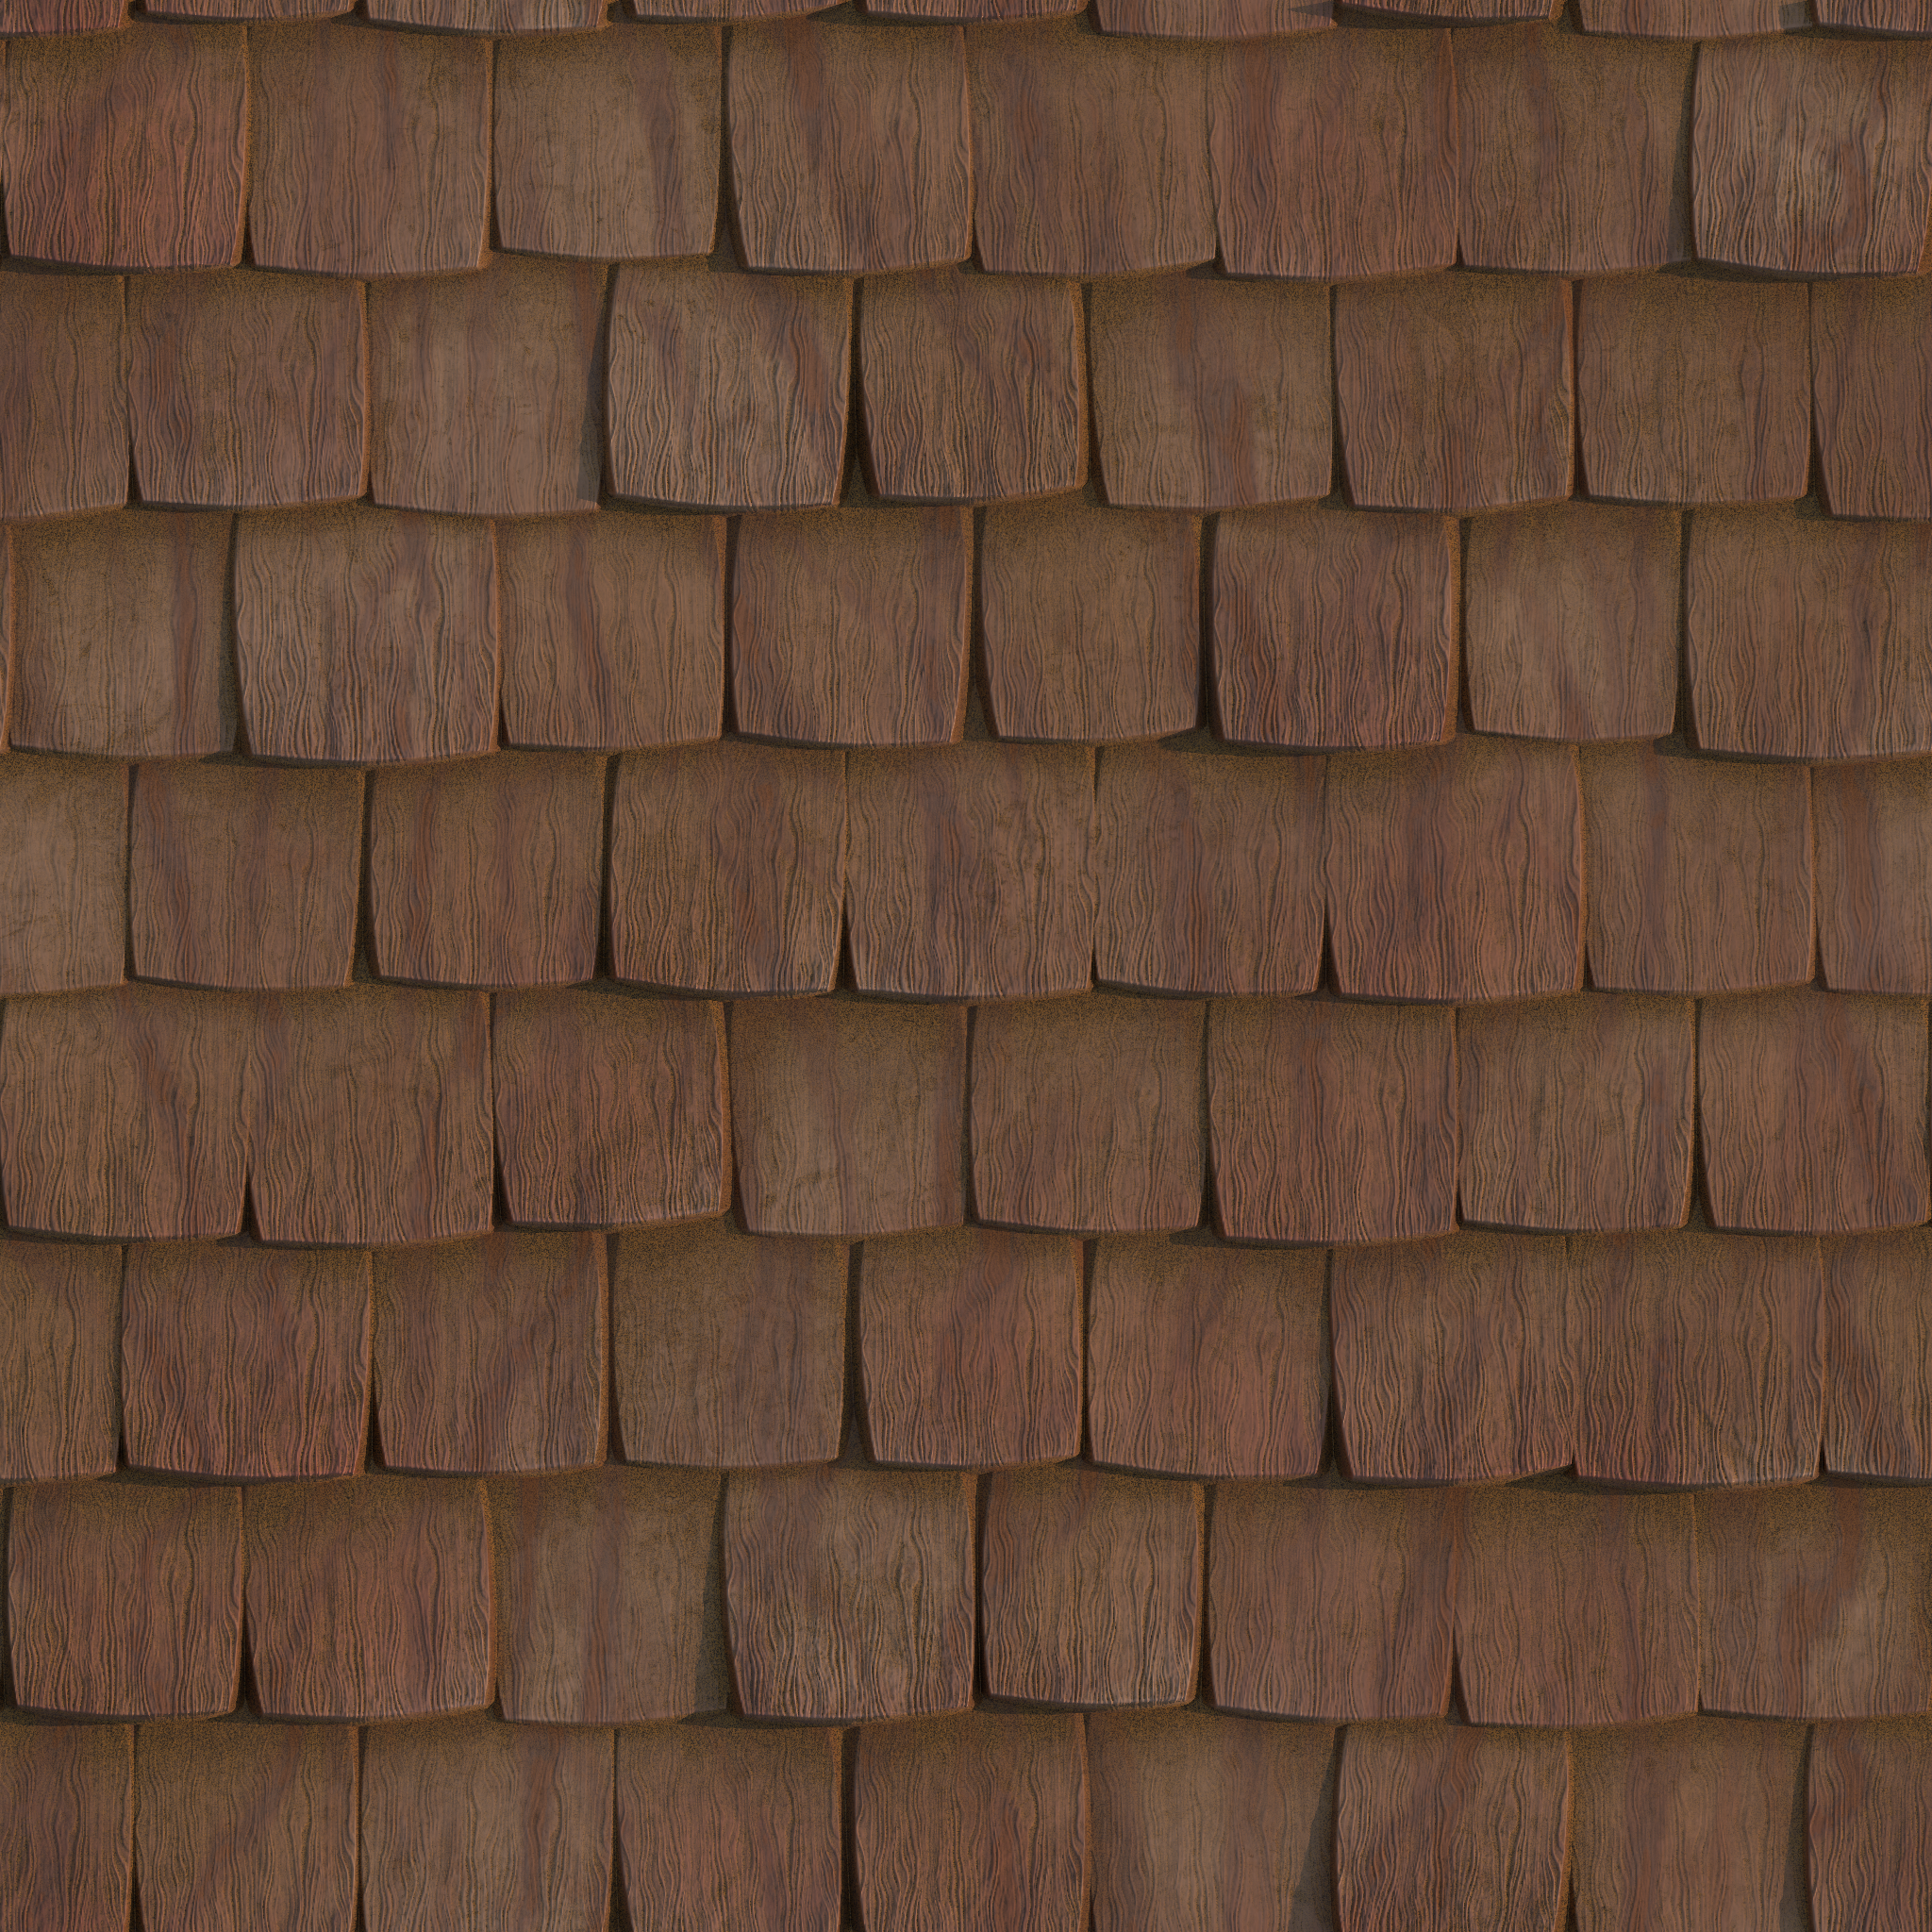 Wood roof tiles